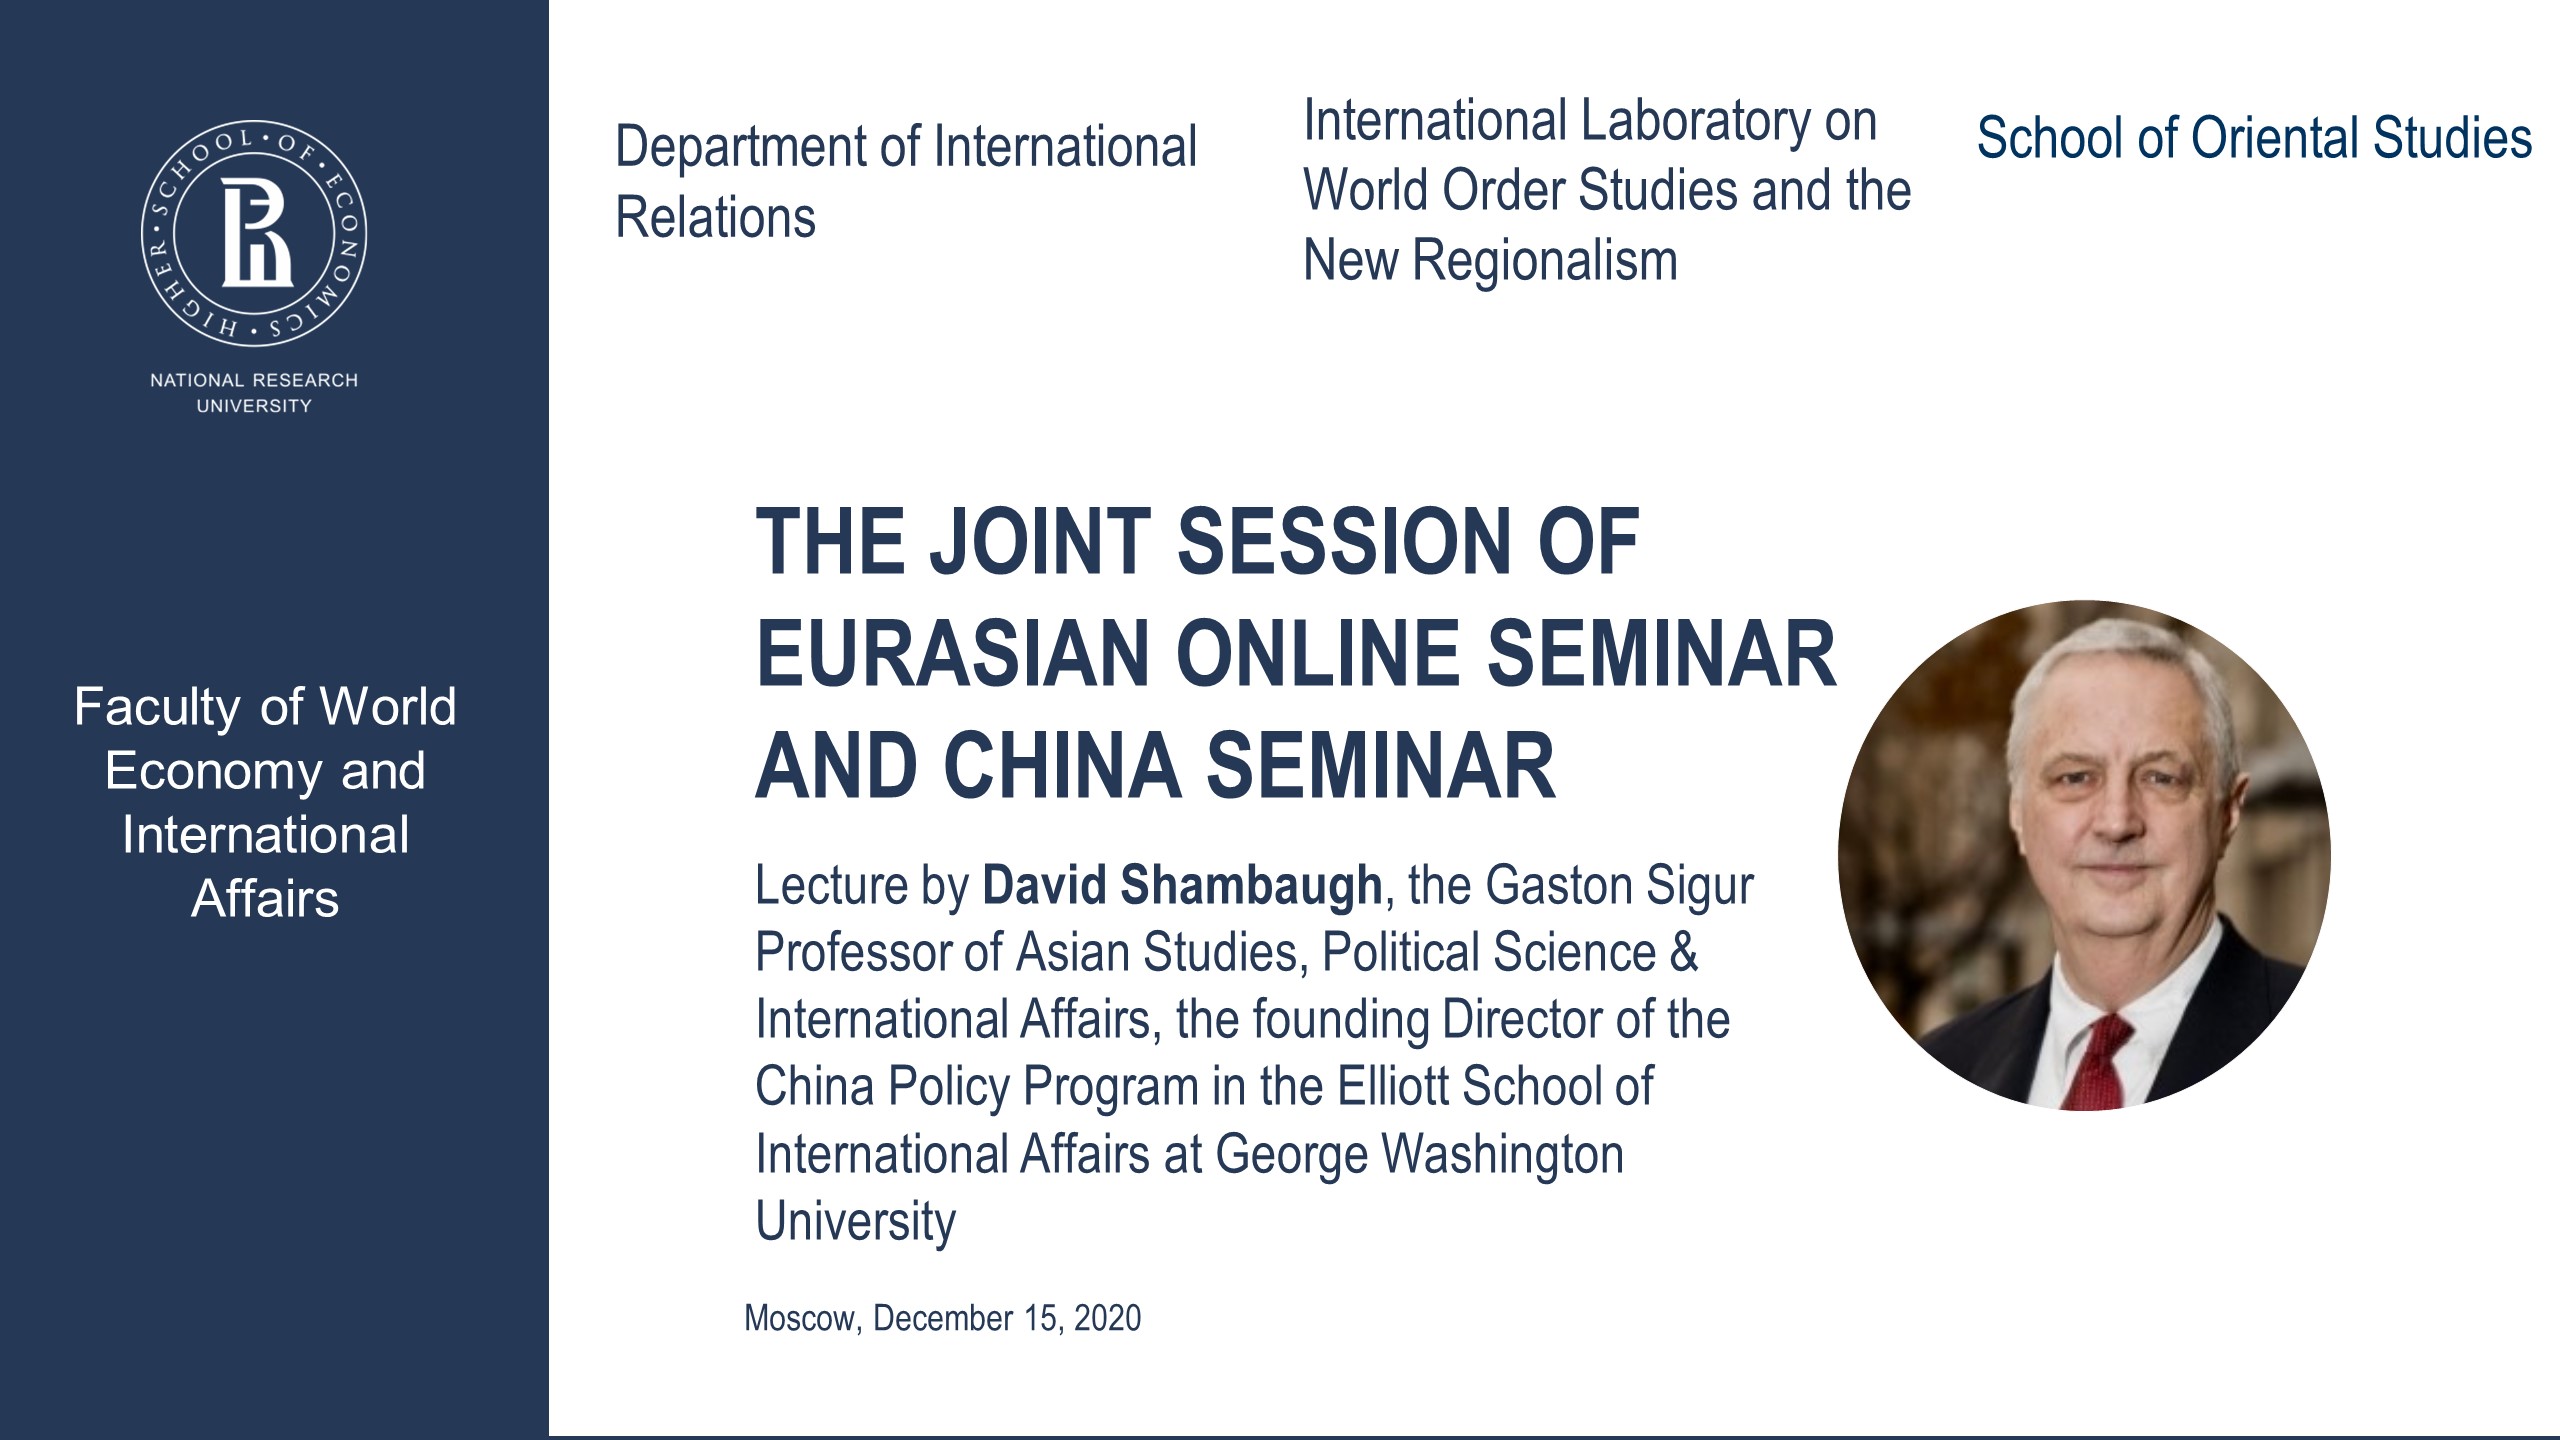 The Joint Session of Eurasian Online Seminar and China seminar with Professor David Shambaugh